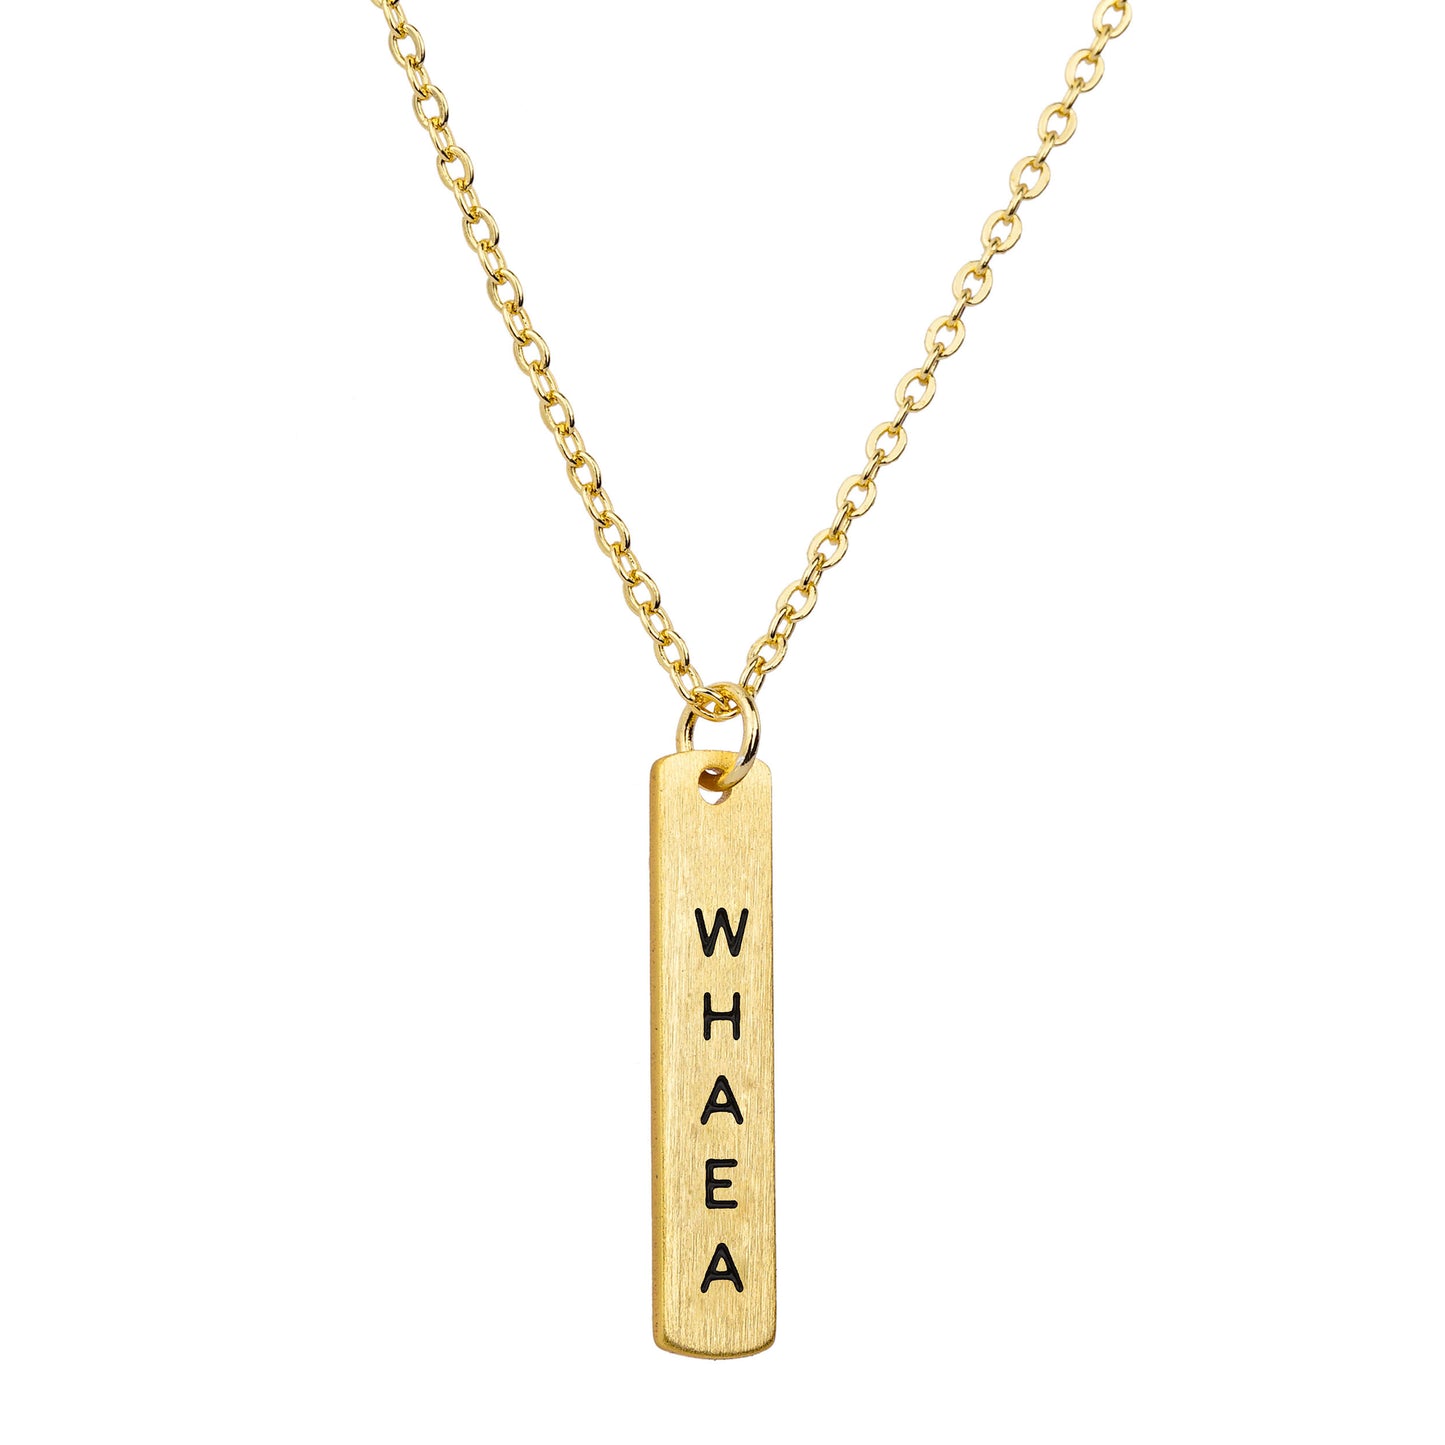 Whaea – Teacher – Necklace